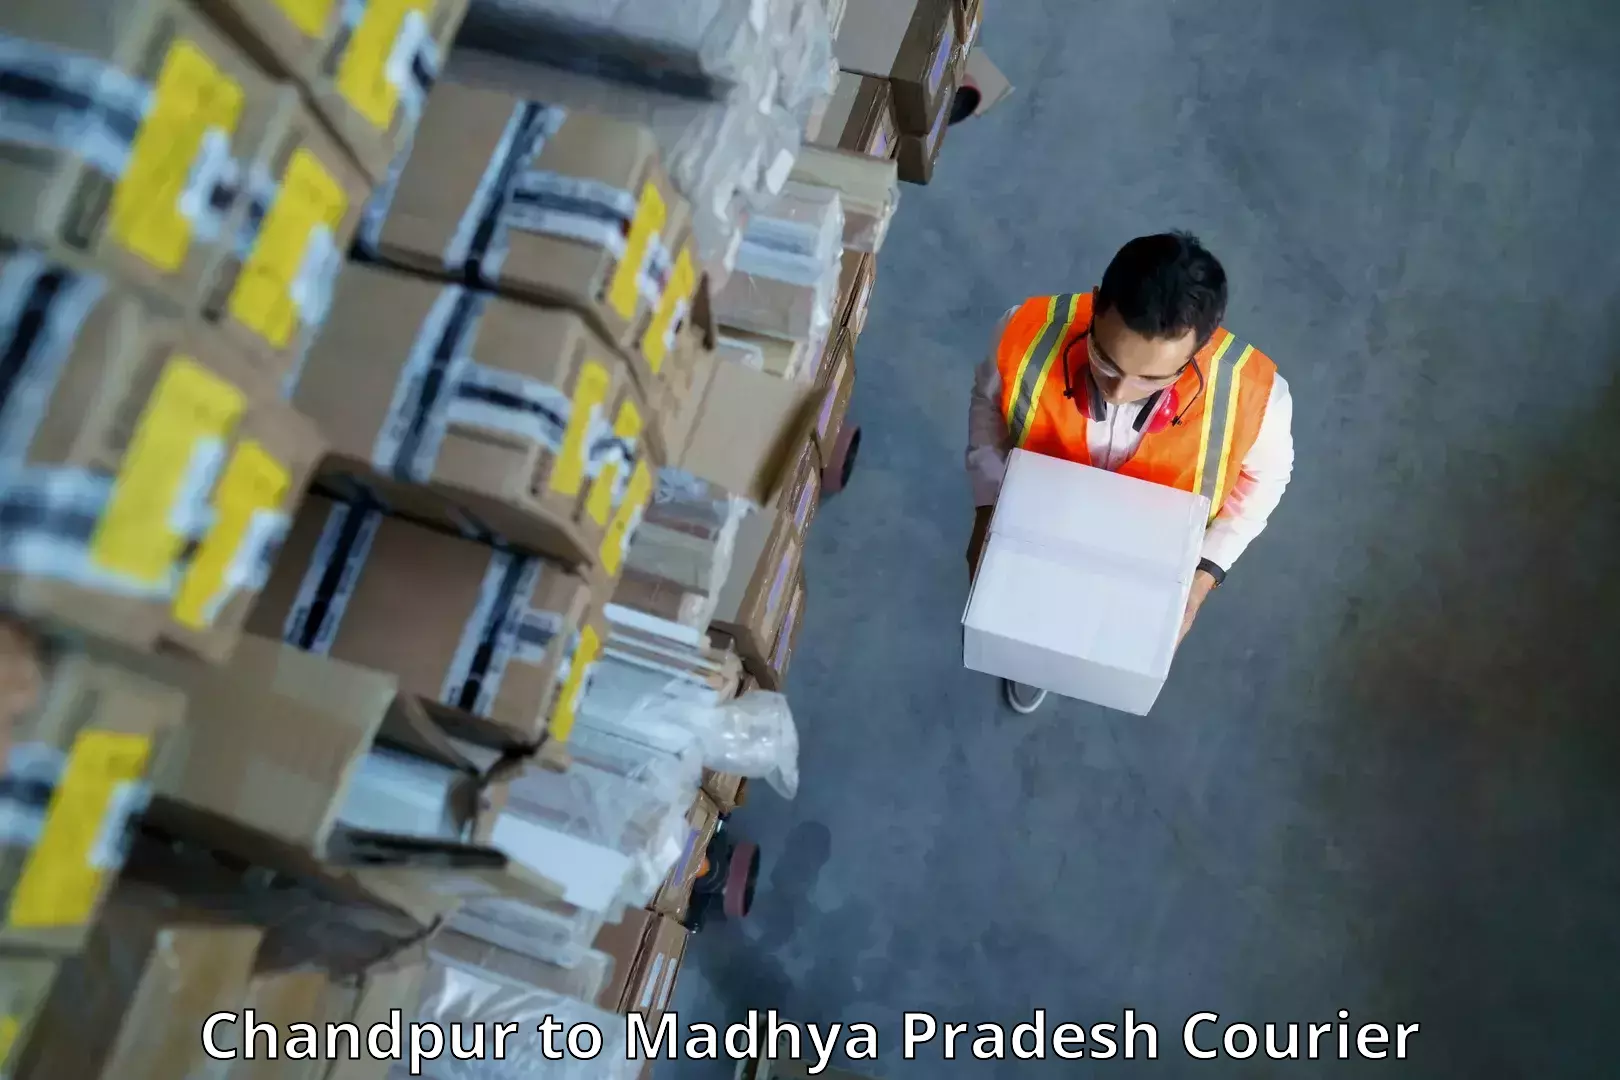 Express delivery capabilities Chandpur to Sagar